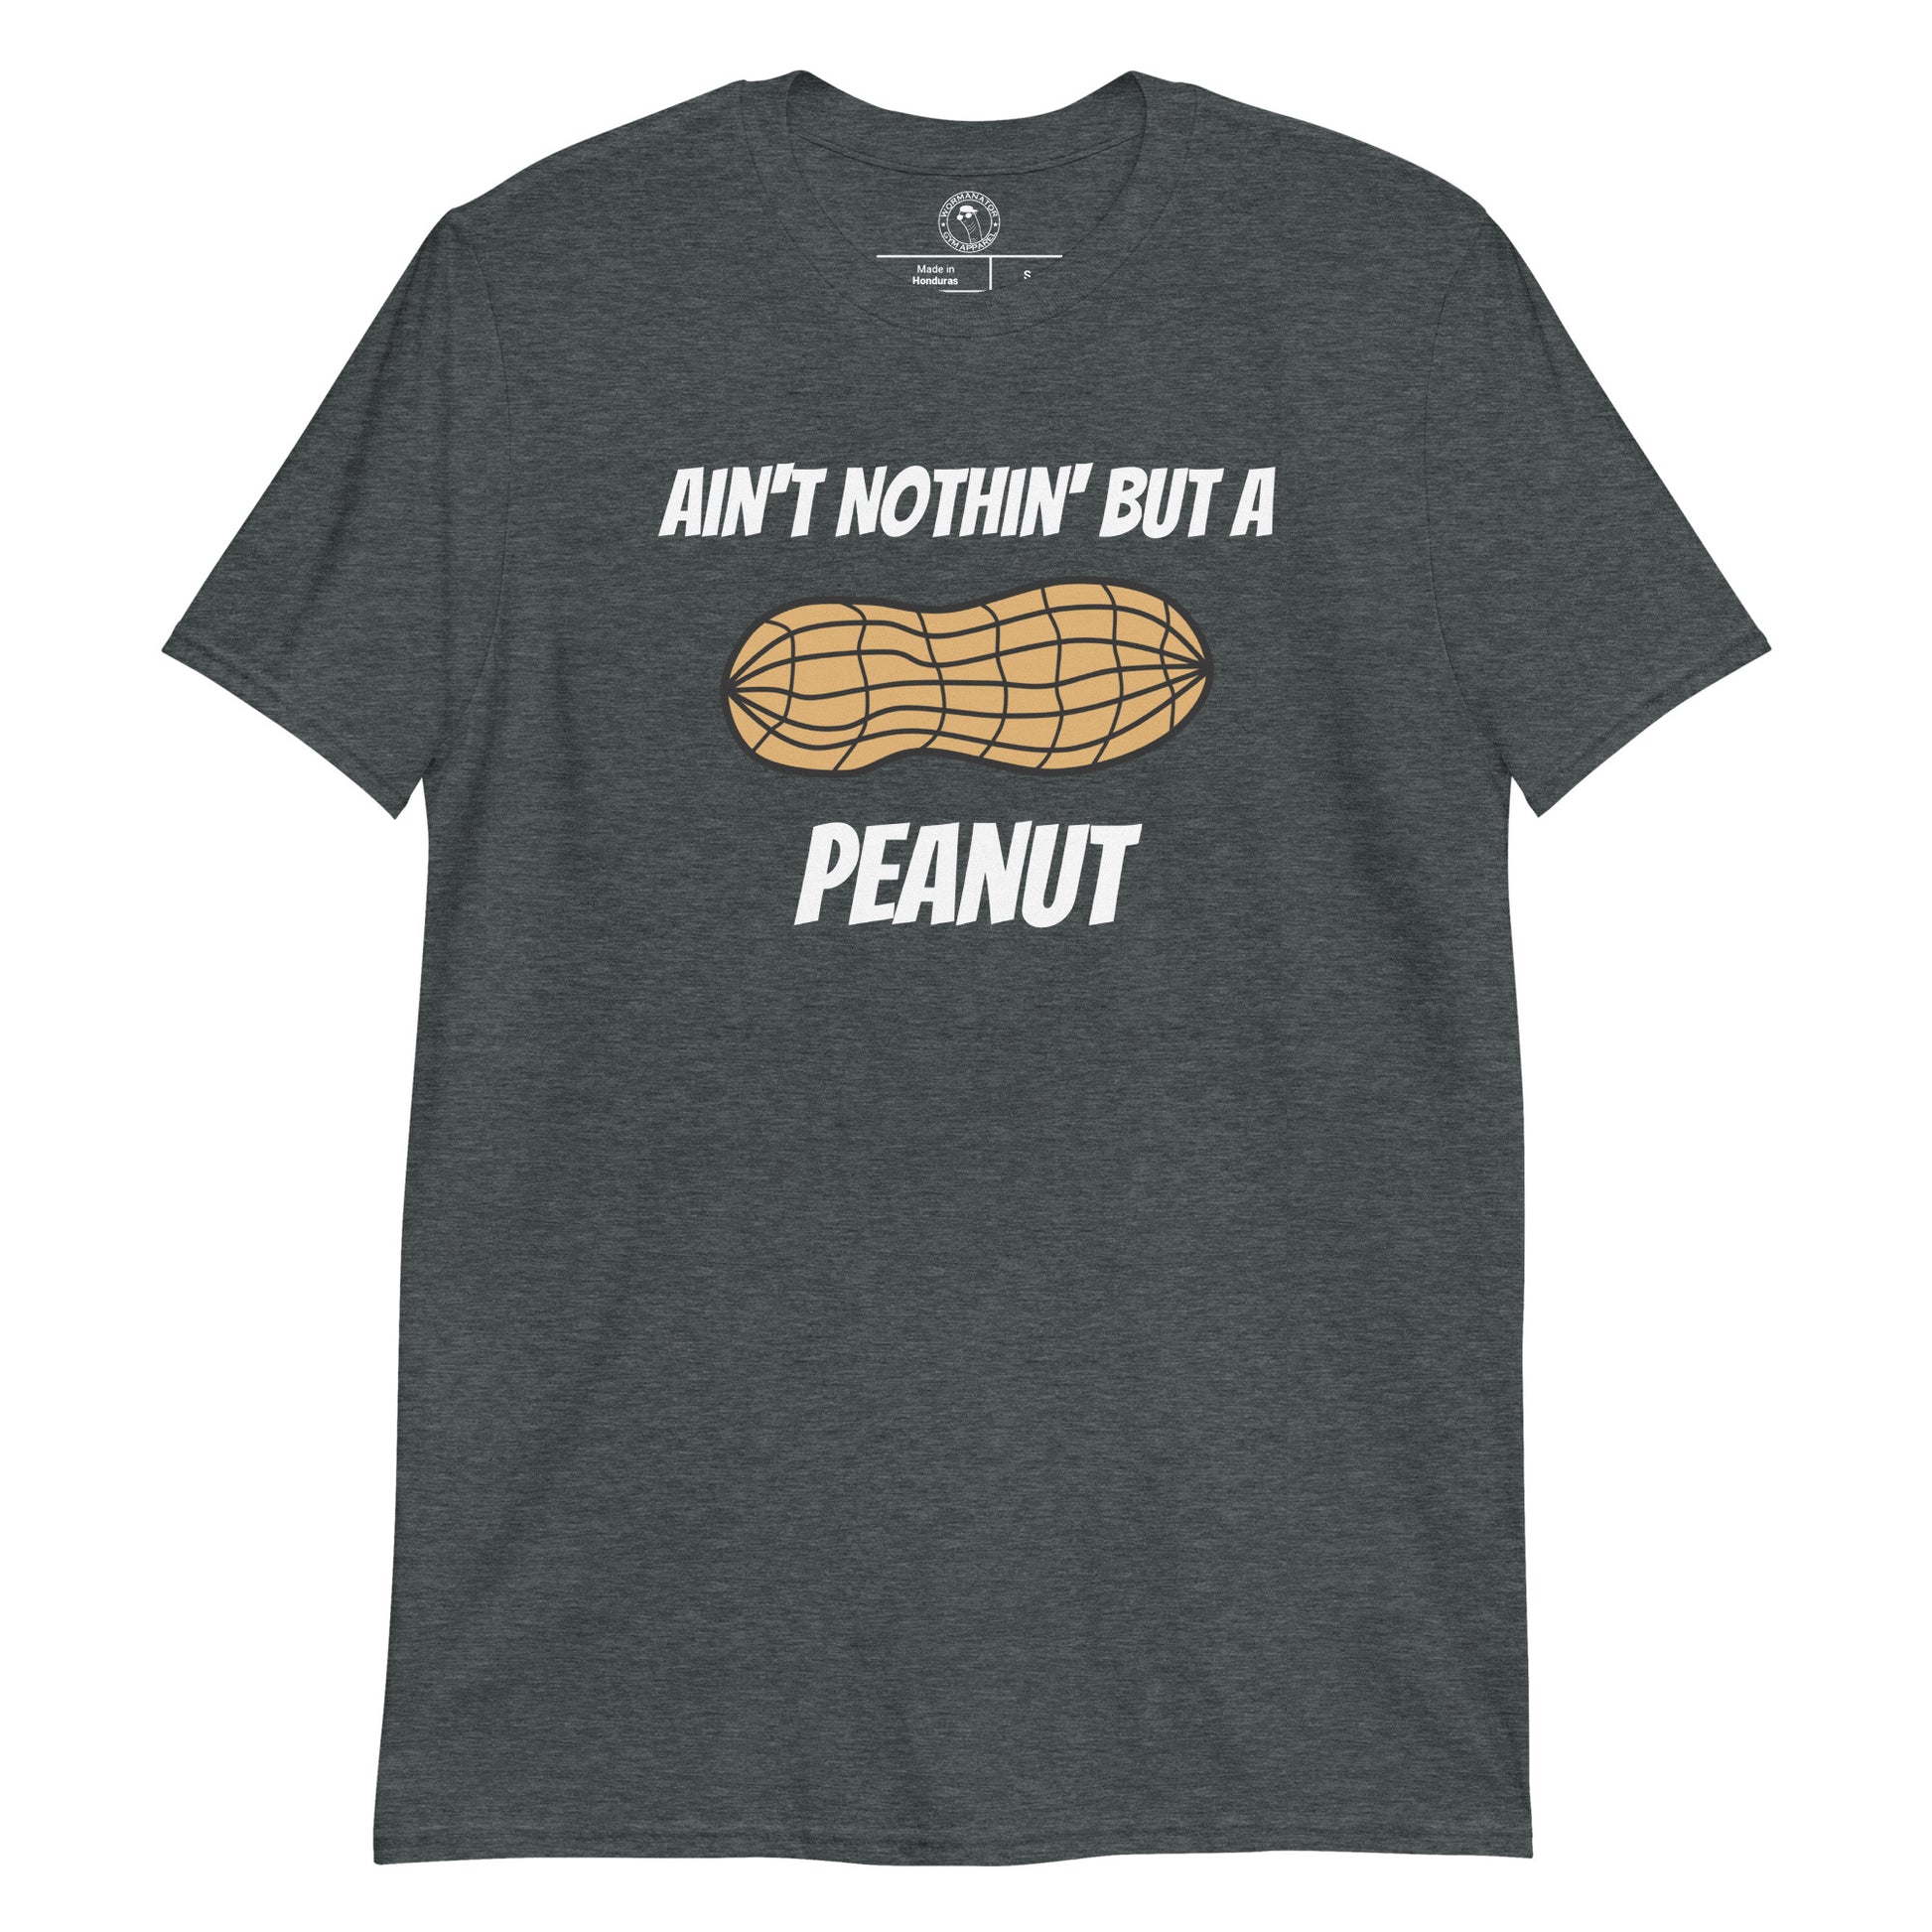 Ain't Nothin' but a Peanut Shirt in Dark Heather